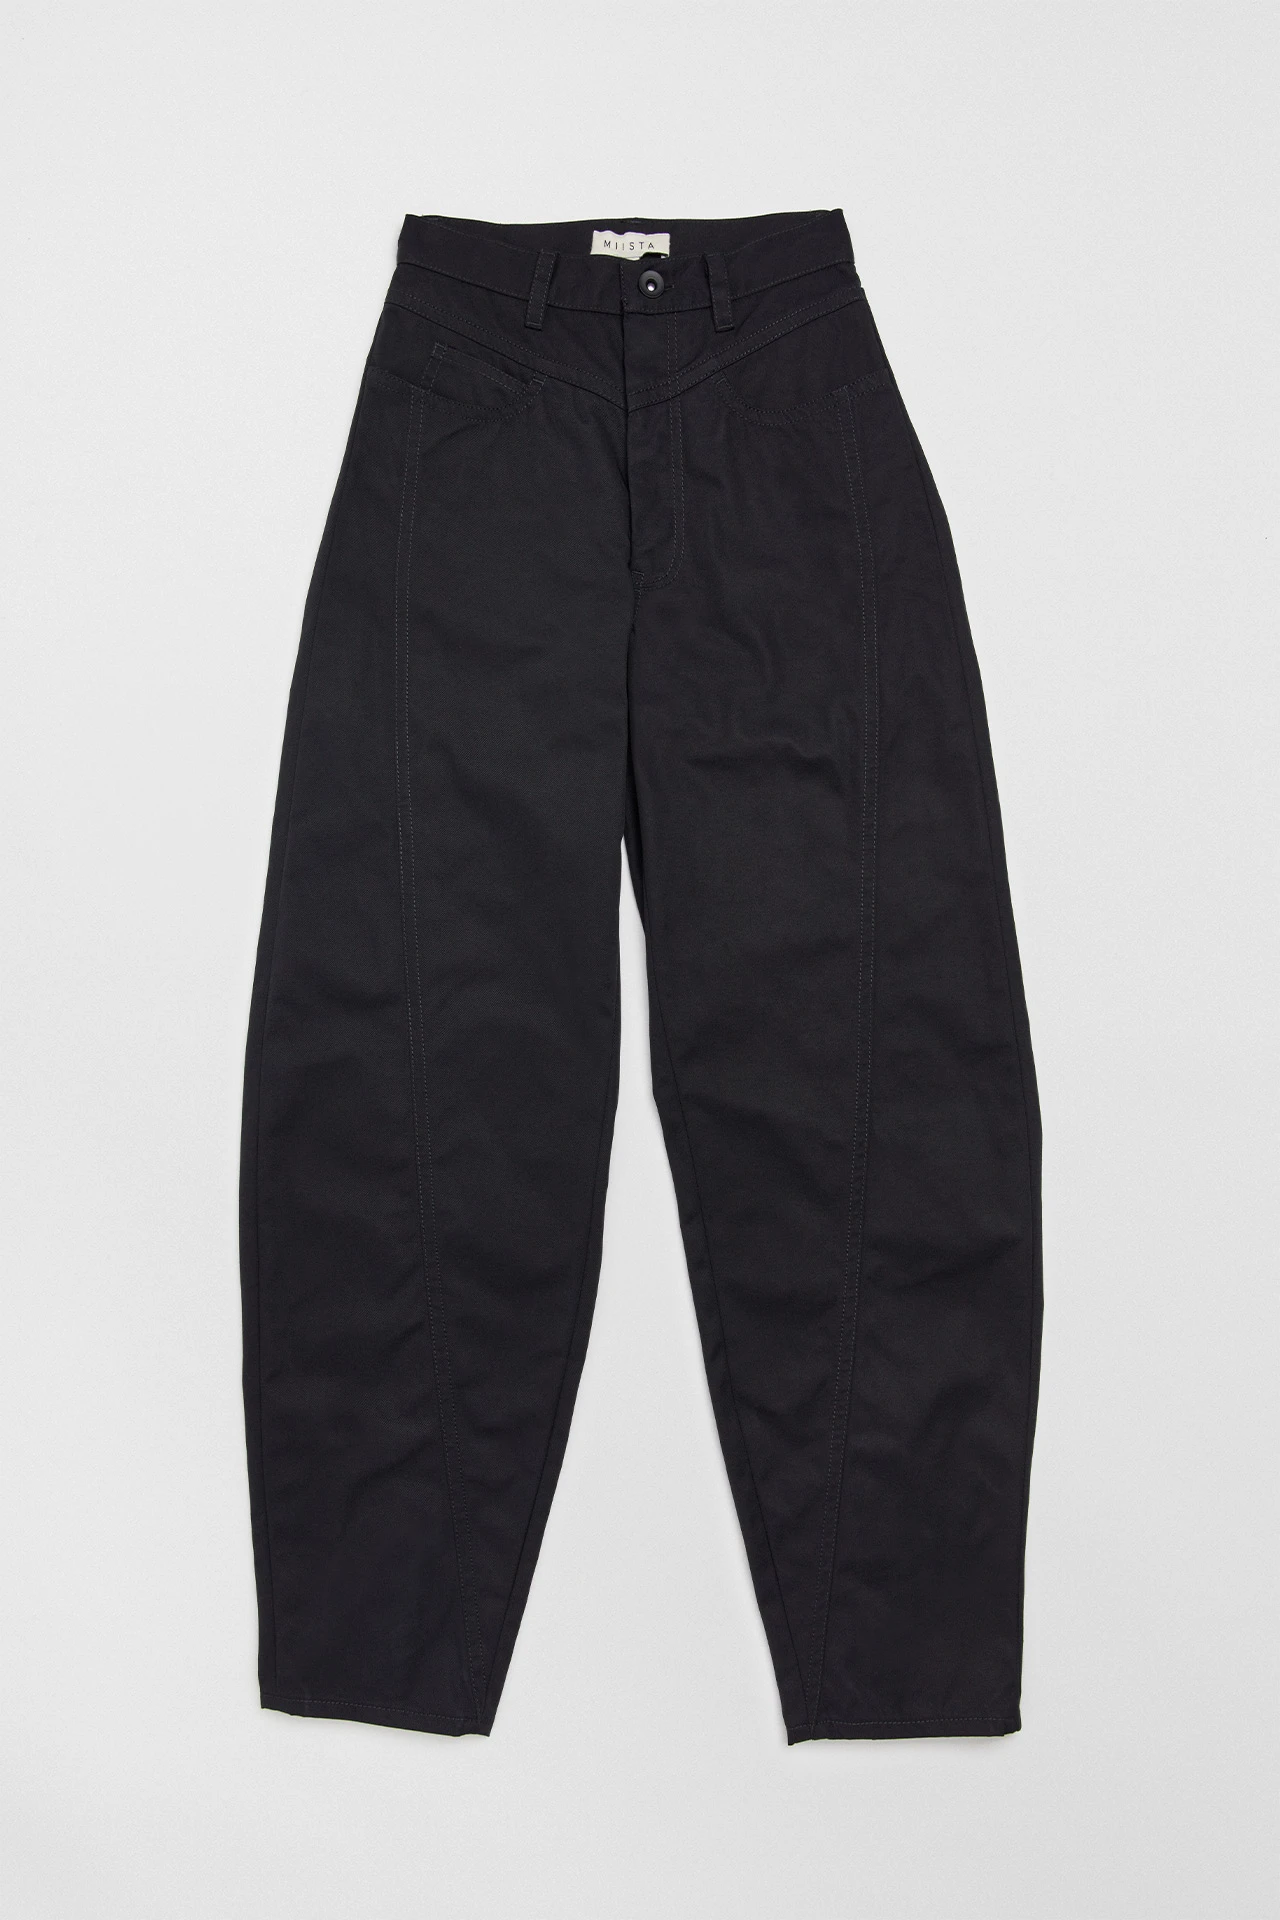 Miista-abai-black-trousers-01